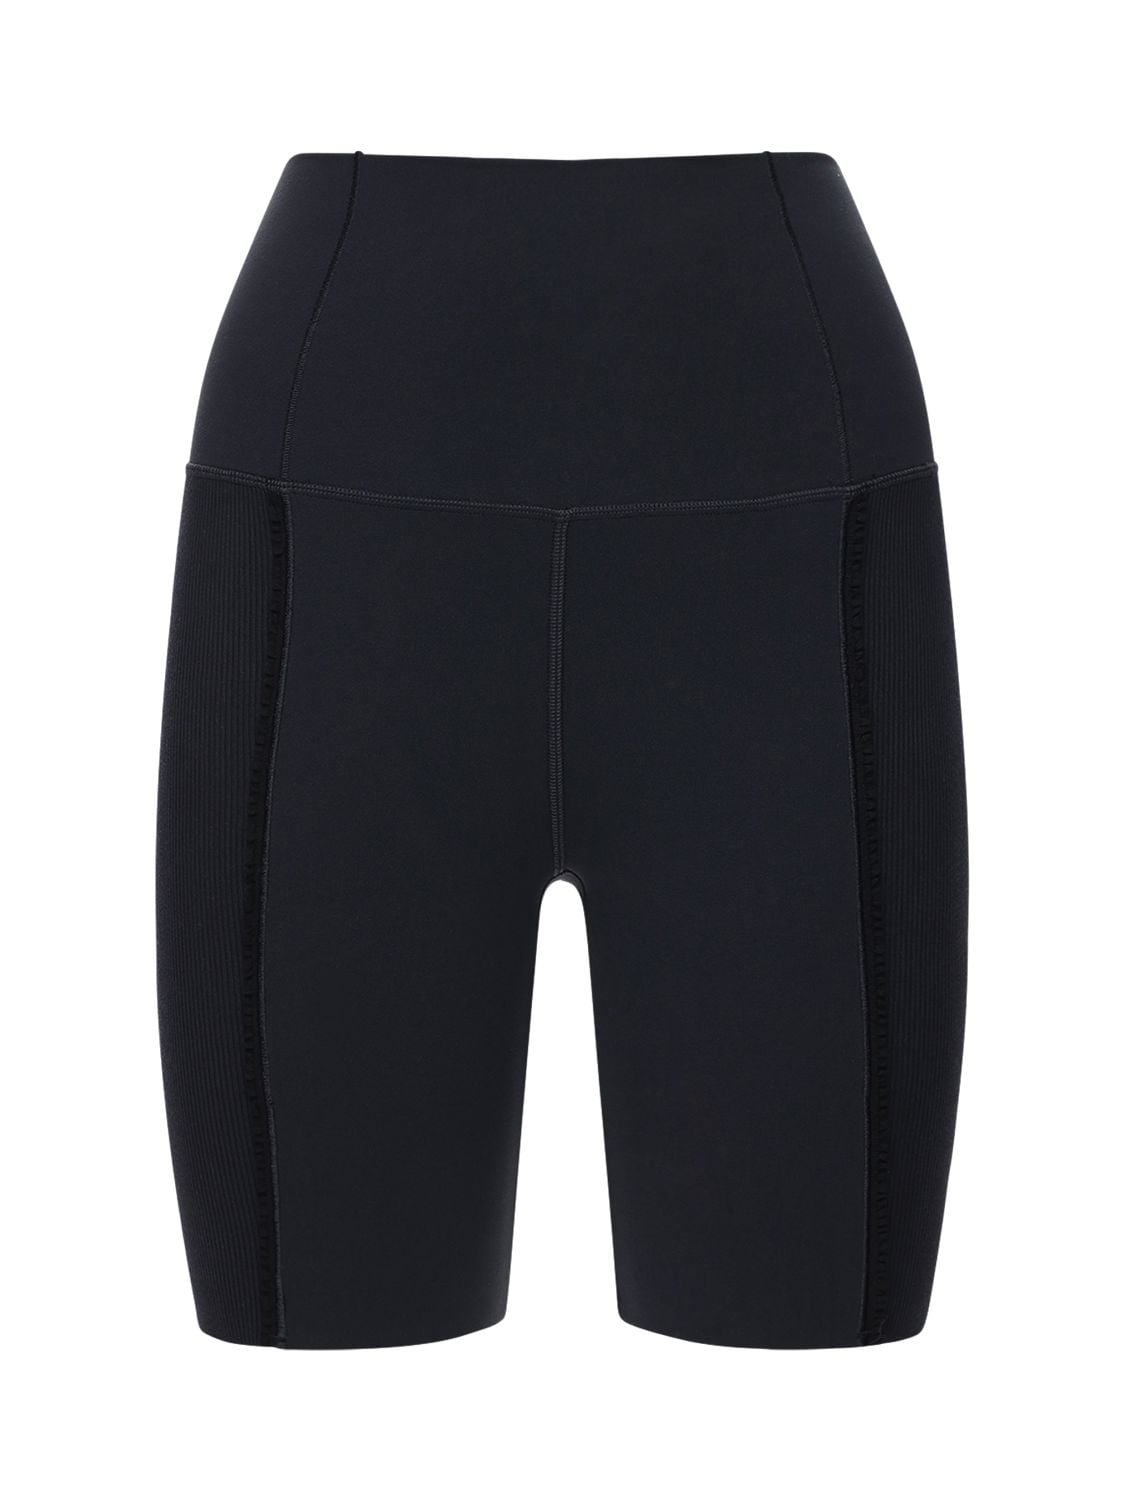 Nike Dri-fit Yoga Infinalon Shorts In Black/ Dark Smoke Grey